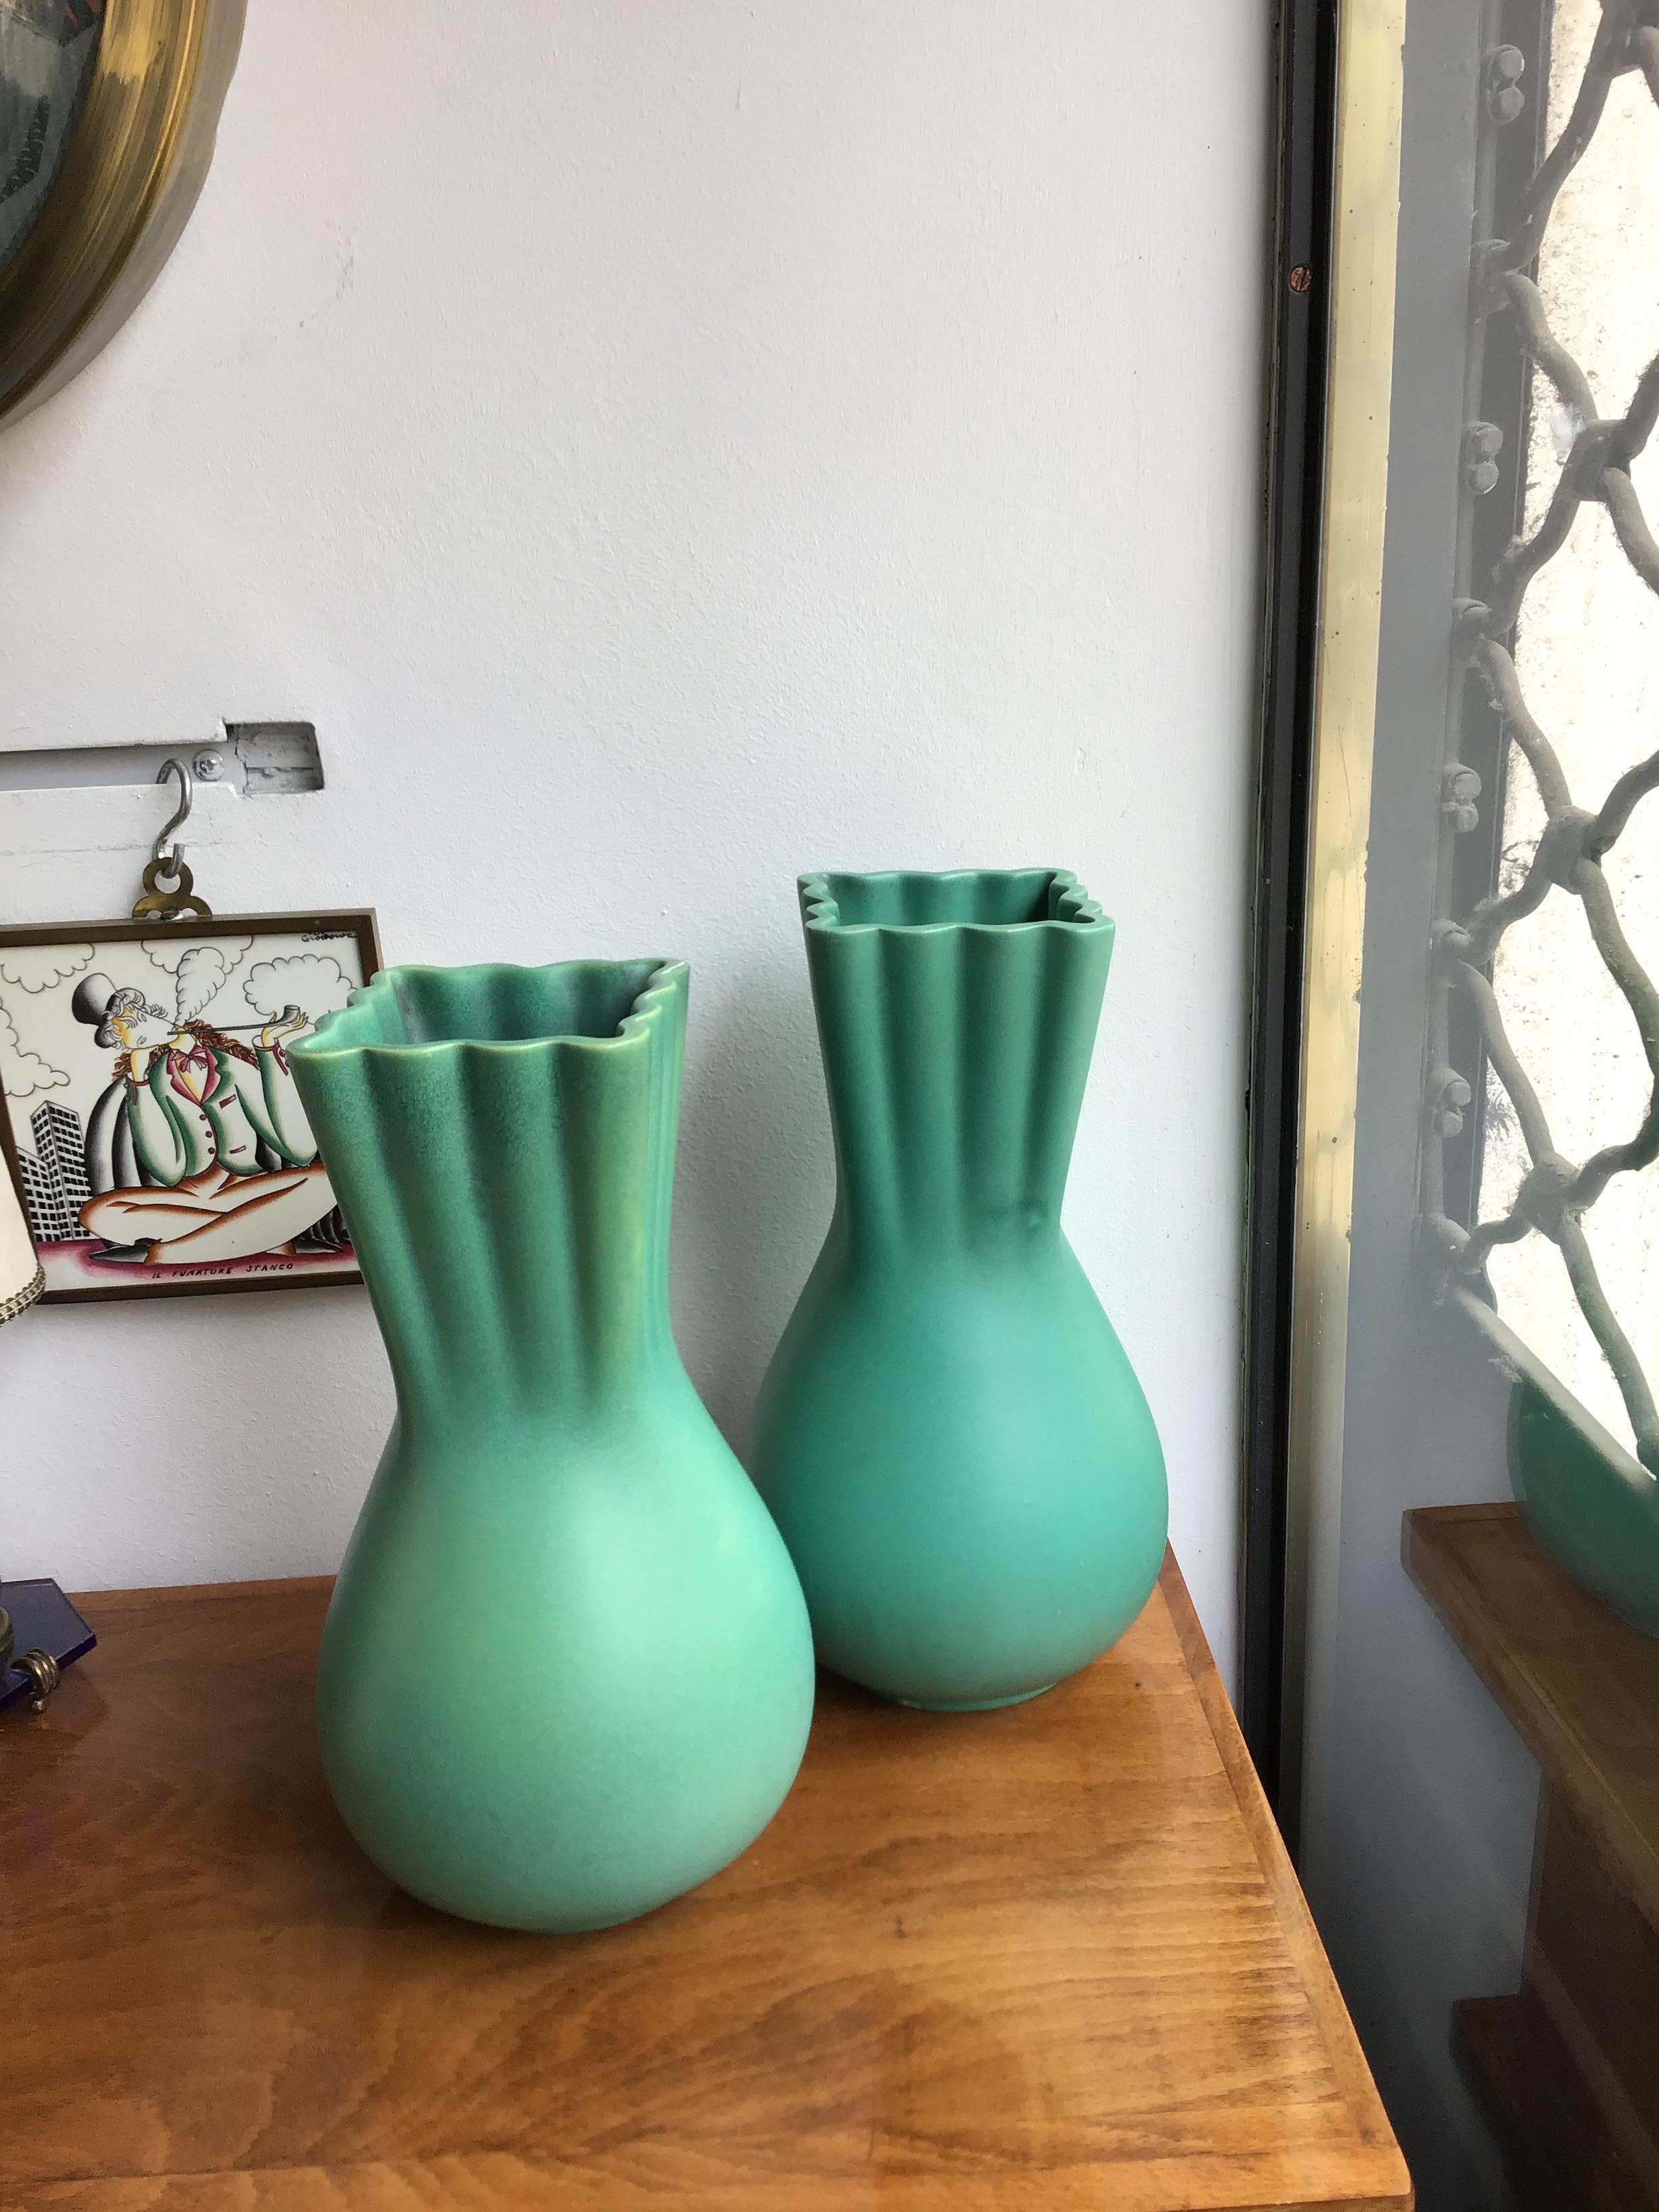 Richard Ginori Giovanni Gariboldi Green Vase Ceramic, 1950, Italy For Sale 4